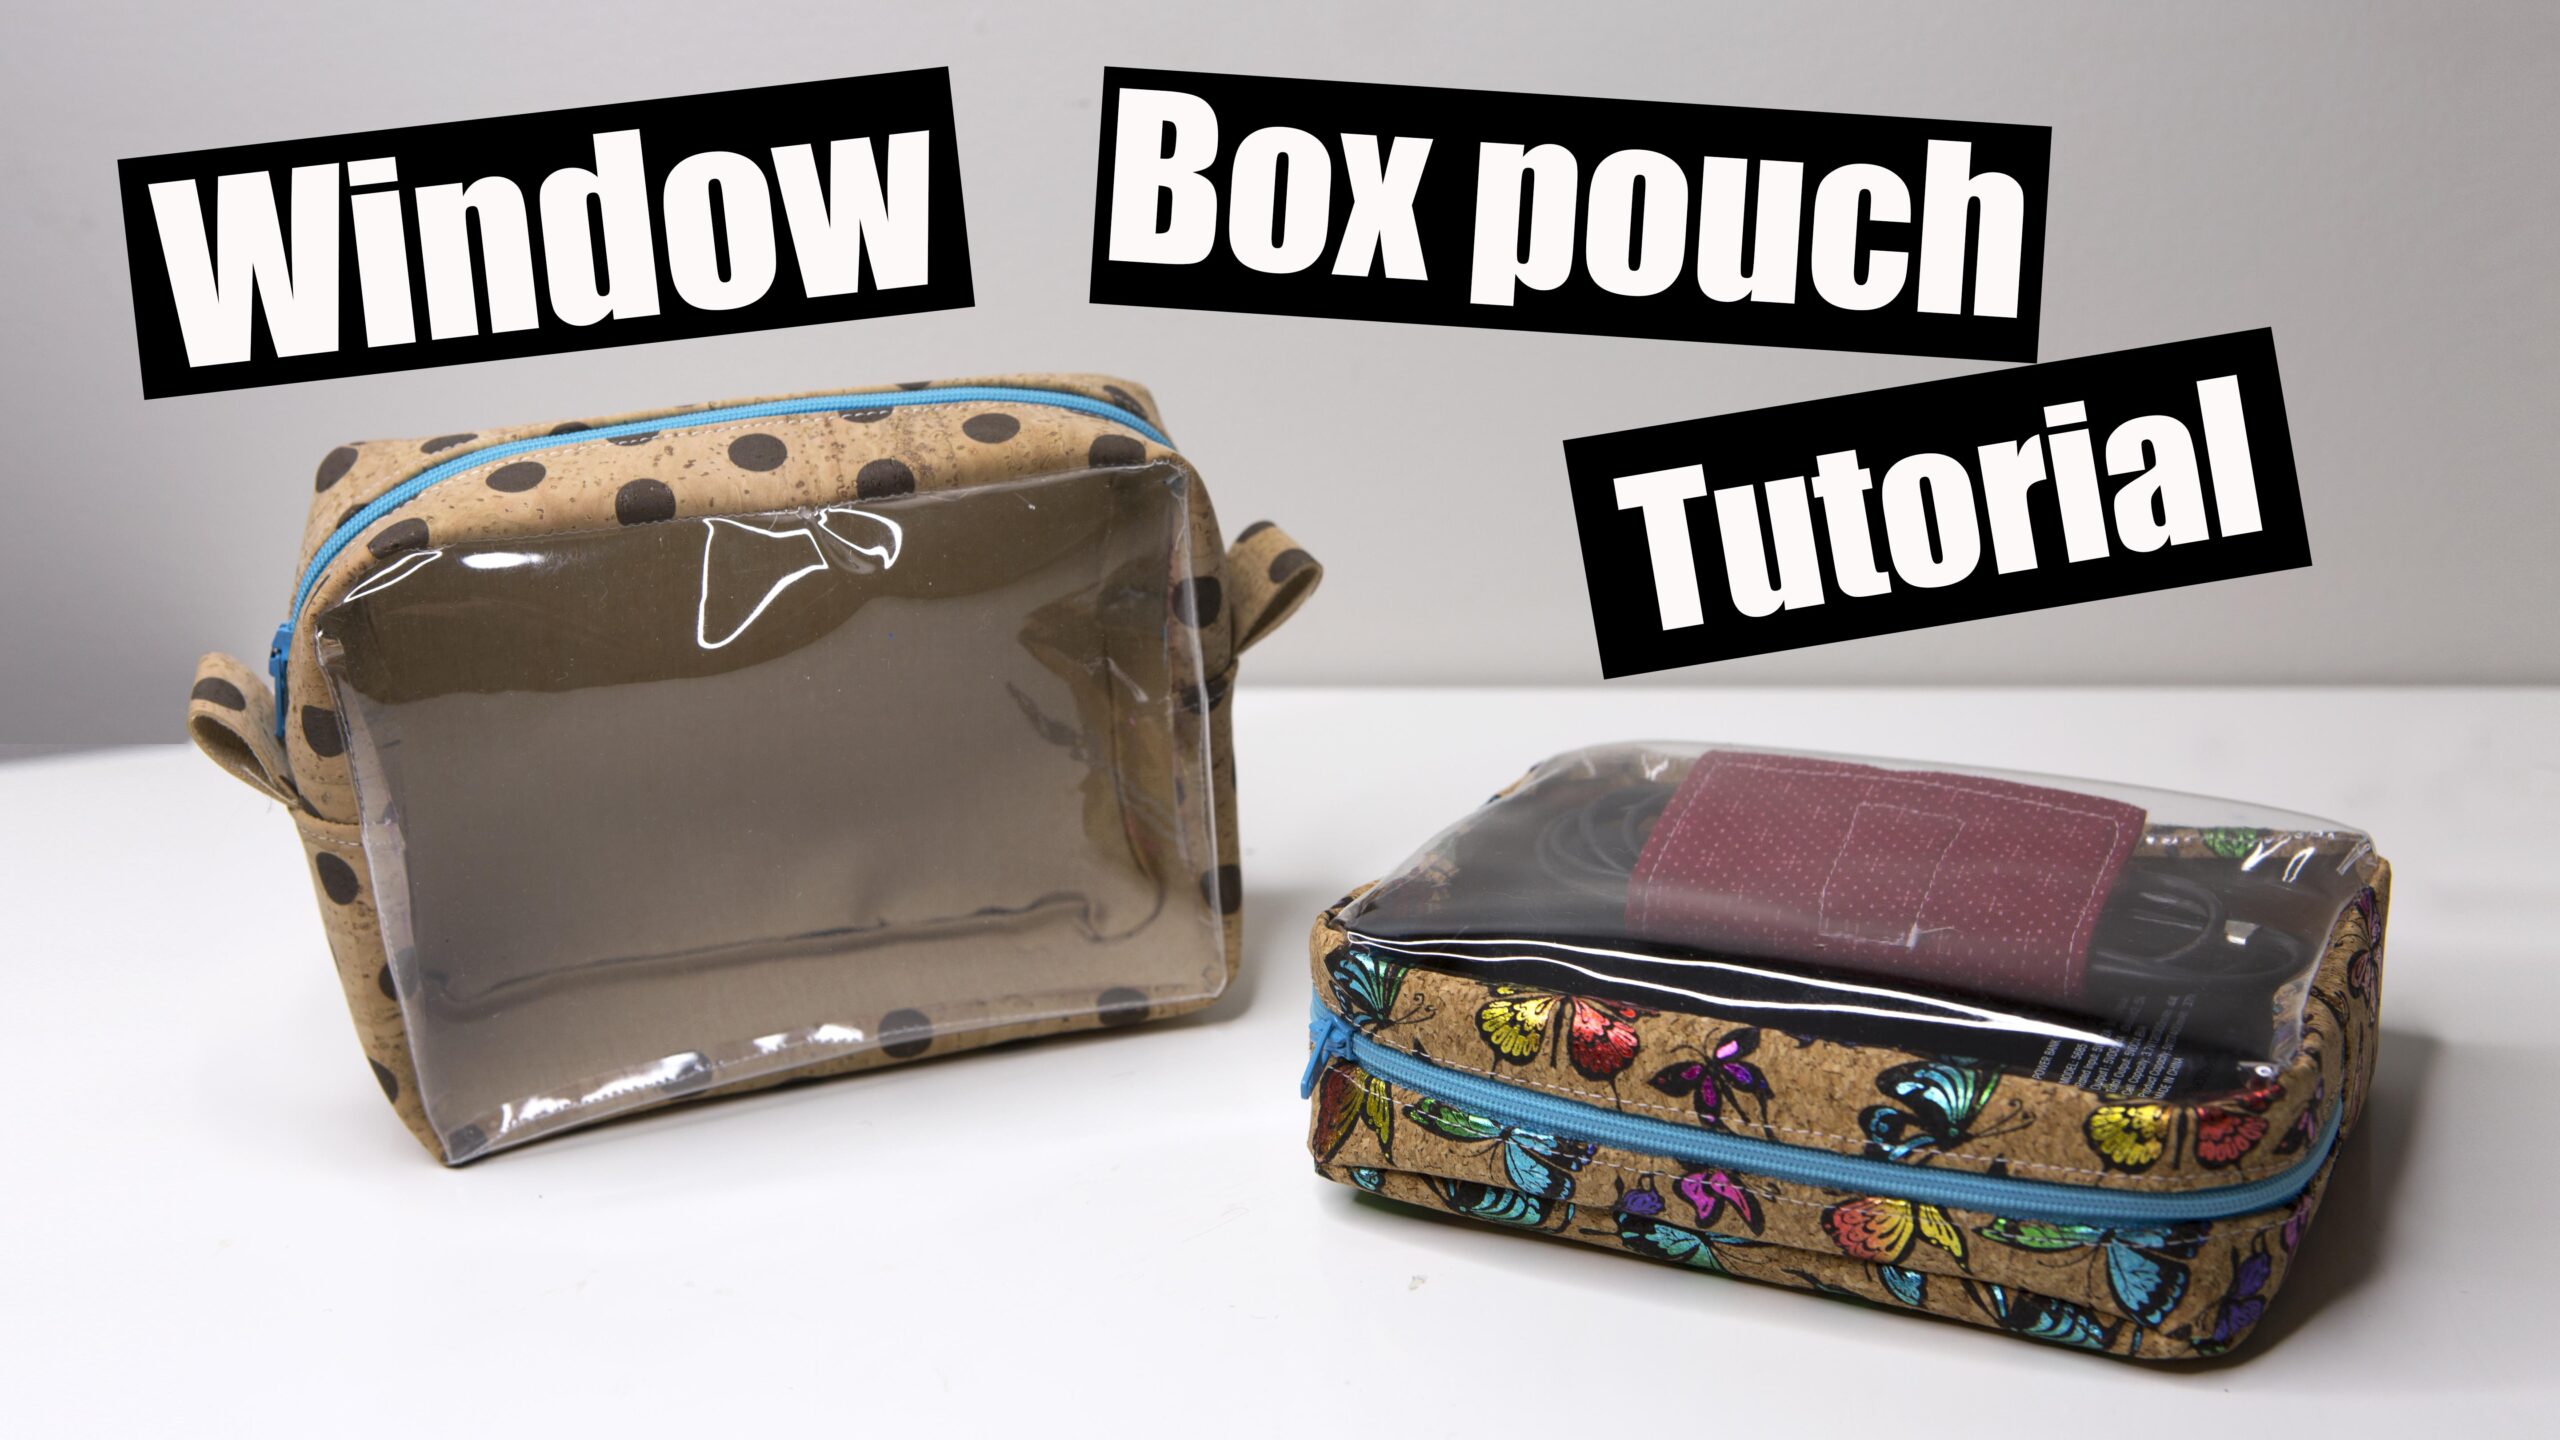 Window box pouch